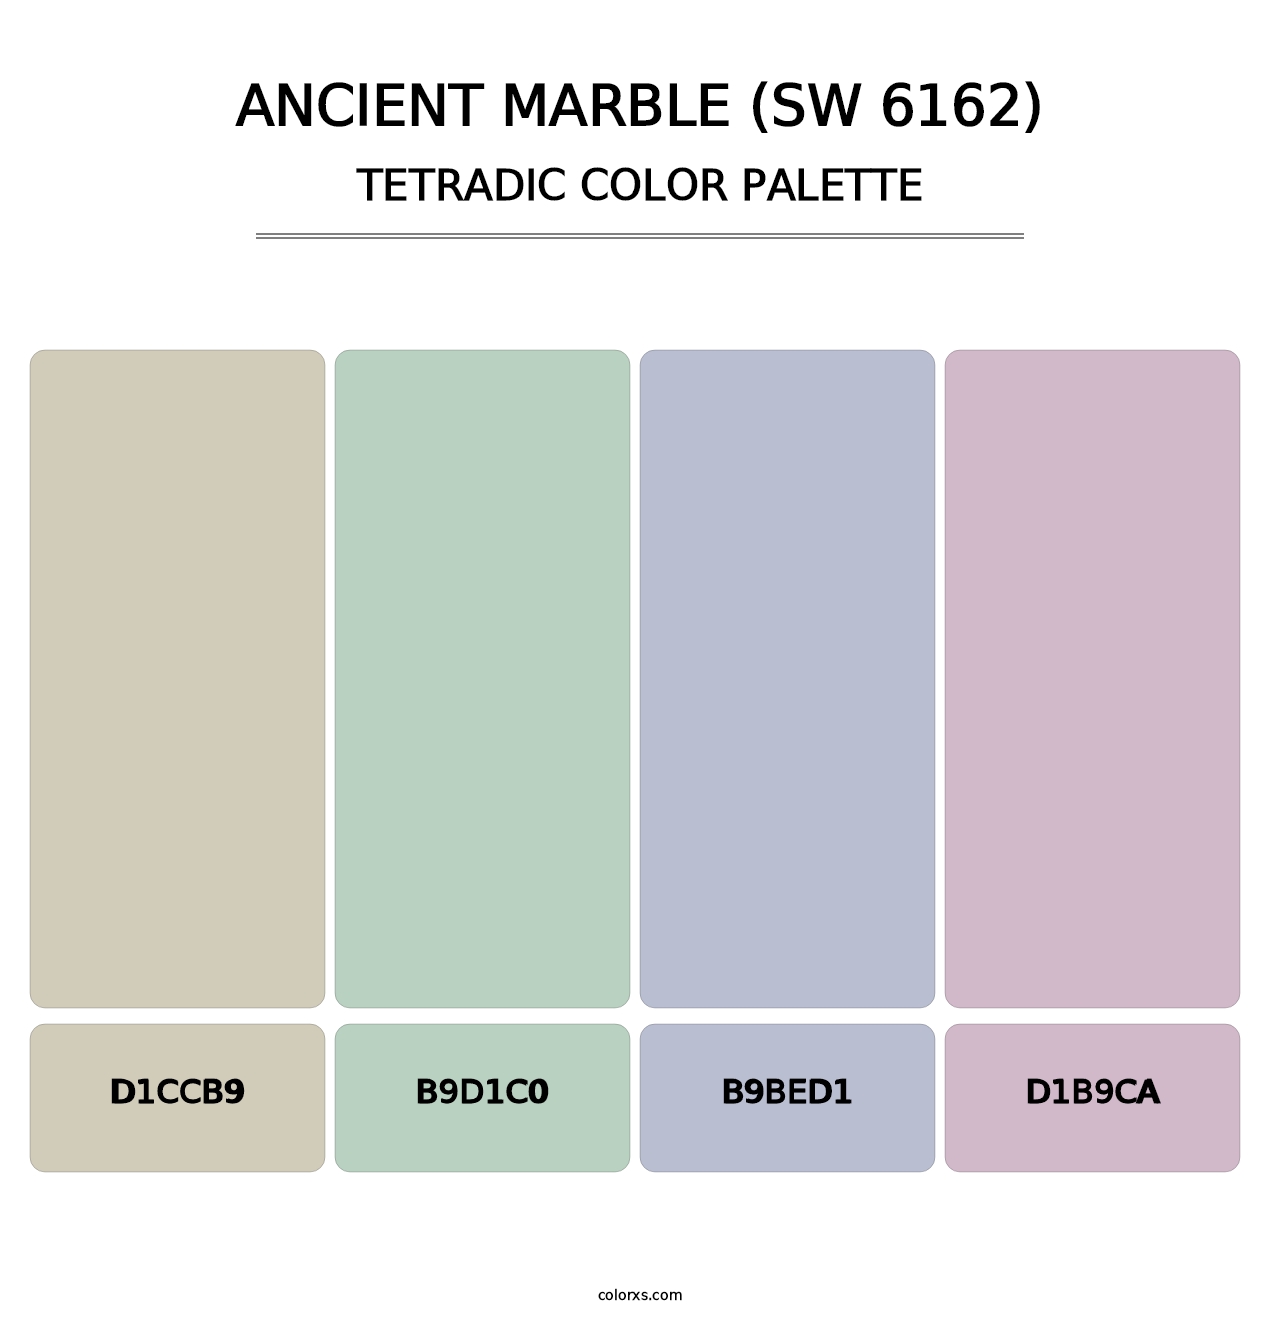 Ancient Marble (SW 6162) - Tetradic Color Palette